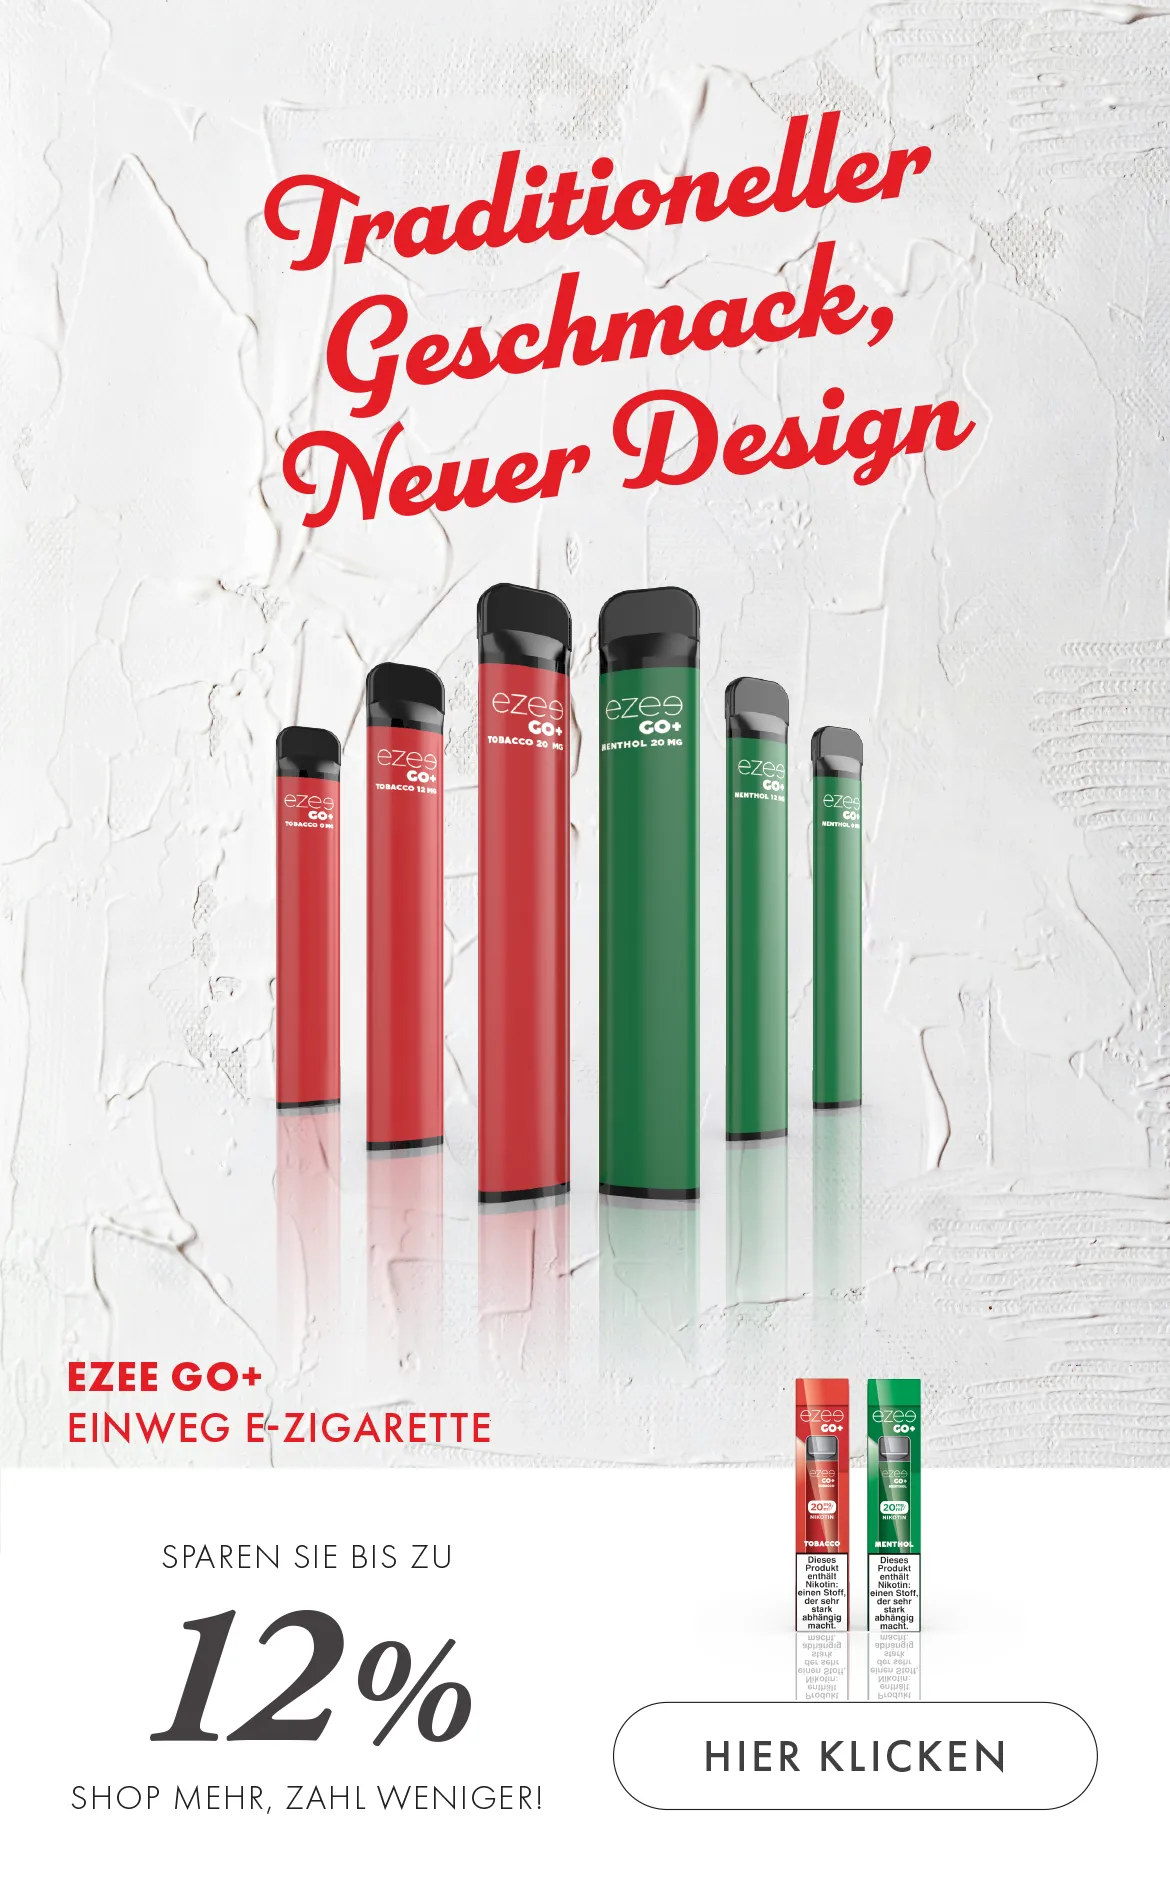 Ezee go+ einweg e-zigarette mit ohne nikotin